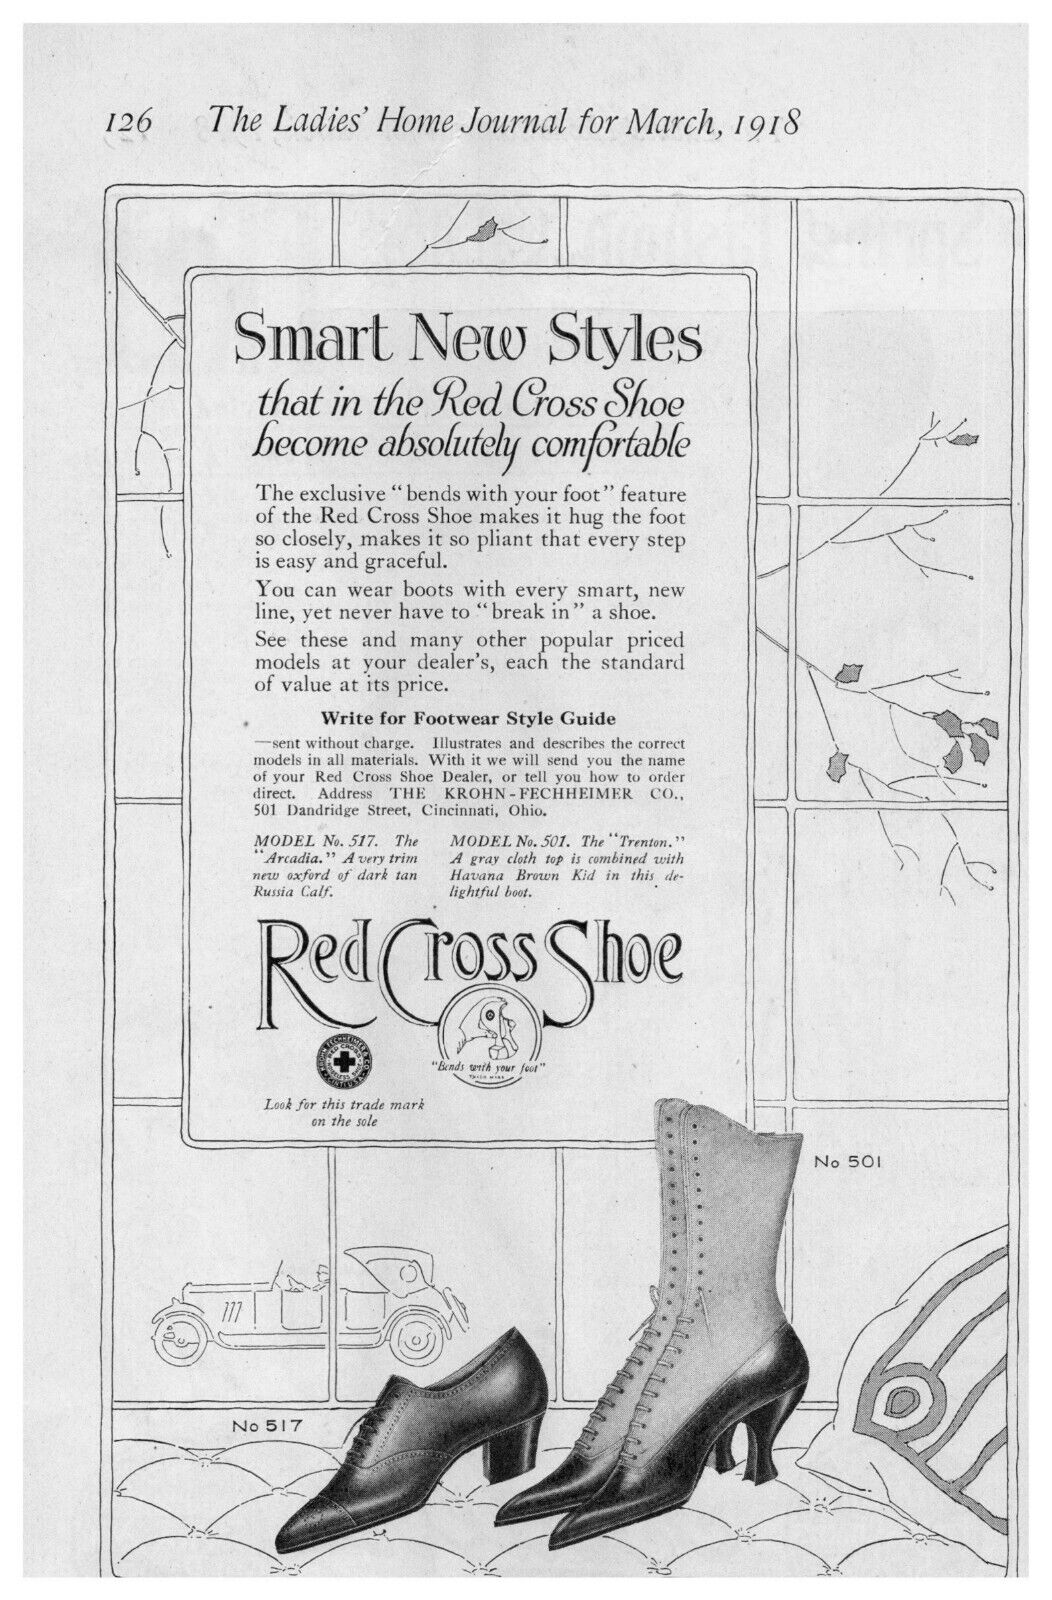 1918 Red Cross Shoe Antique Print Ad WW1 Smart New Styles Footwear Guide 